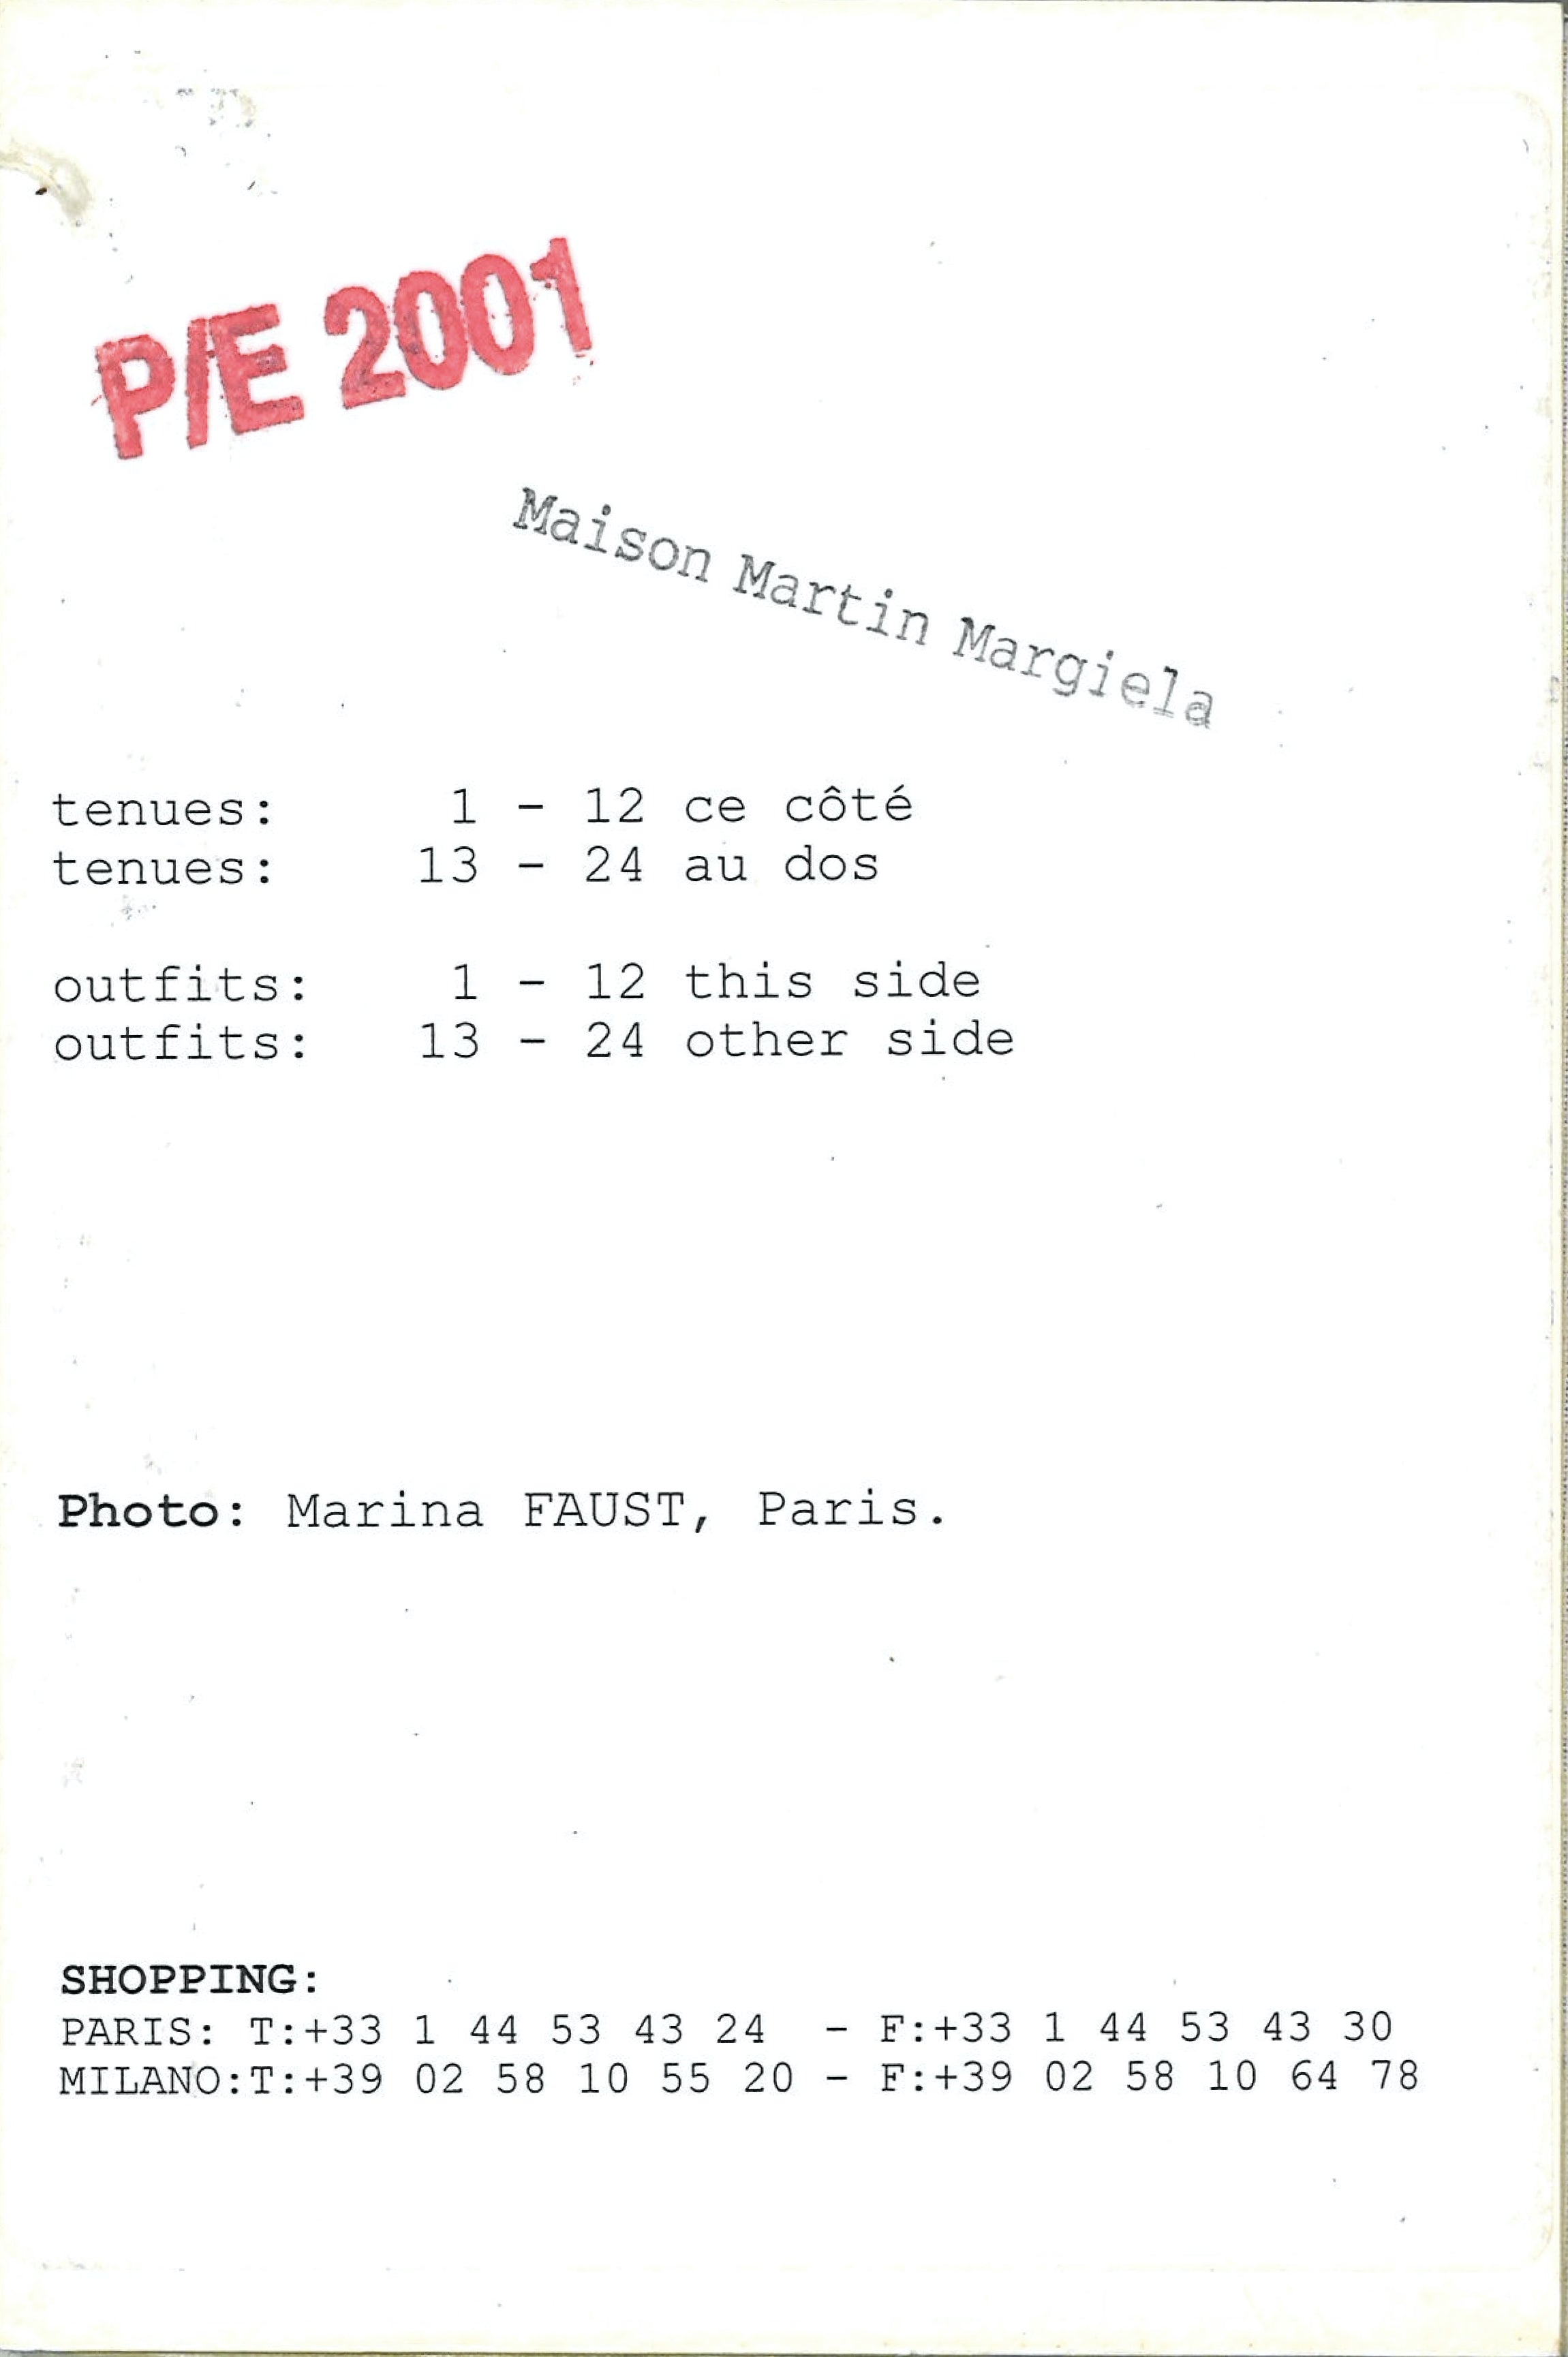 Maison Martin Margiela Lookbook
Womenswear Collection Spring/Summer 2001